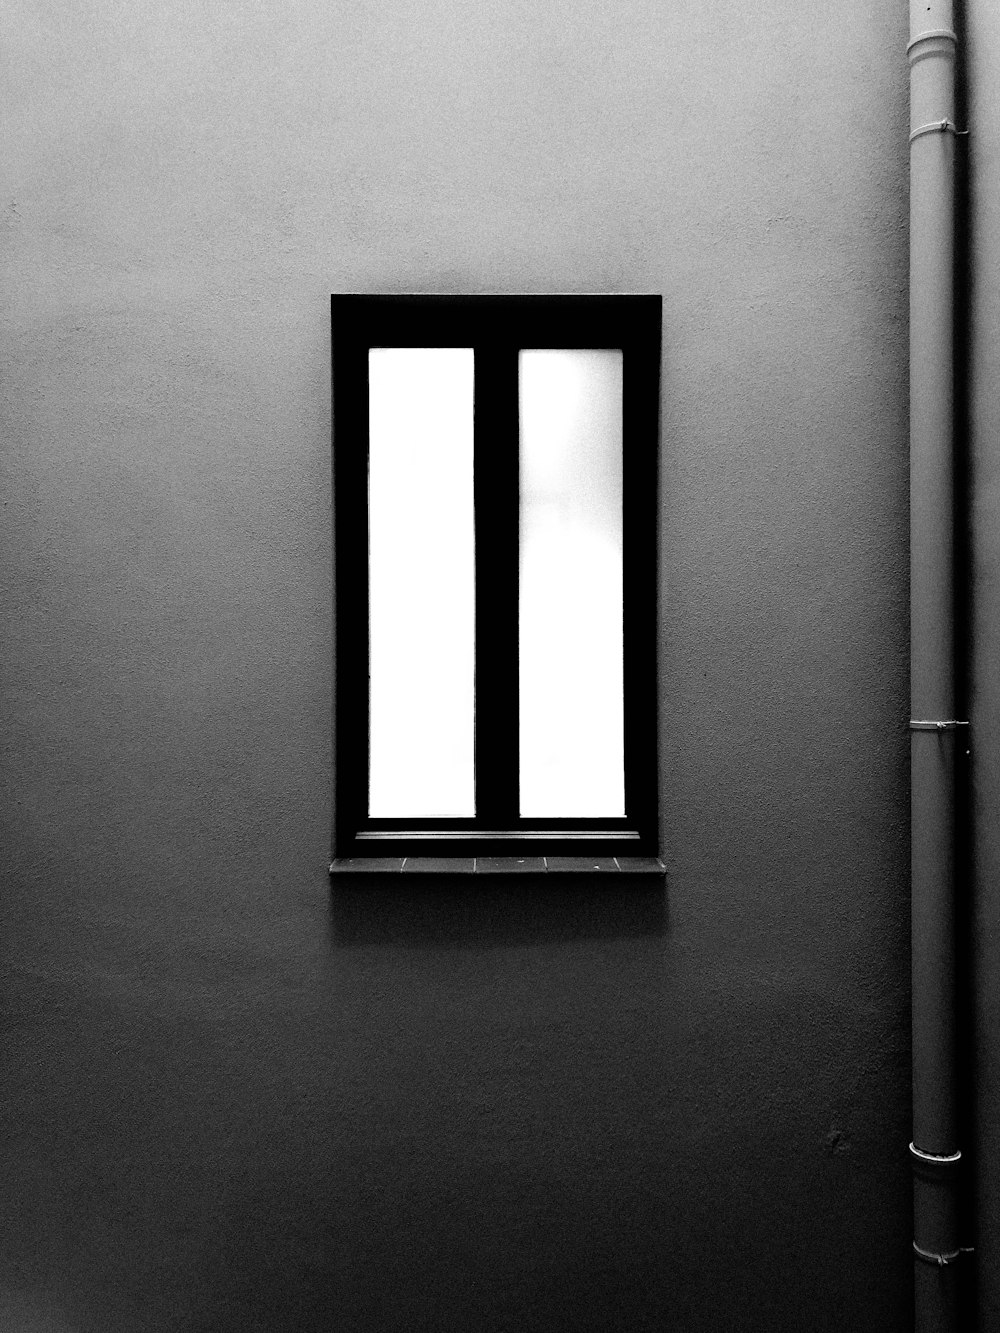 closed black framed window near wall